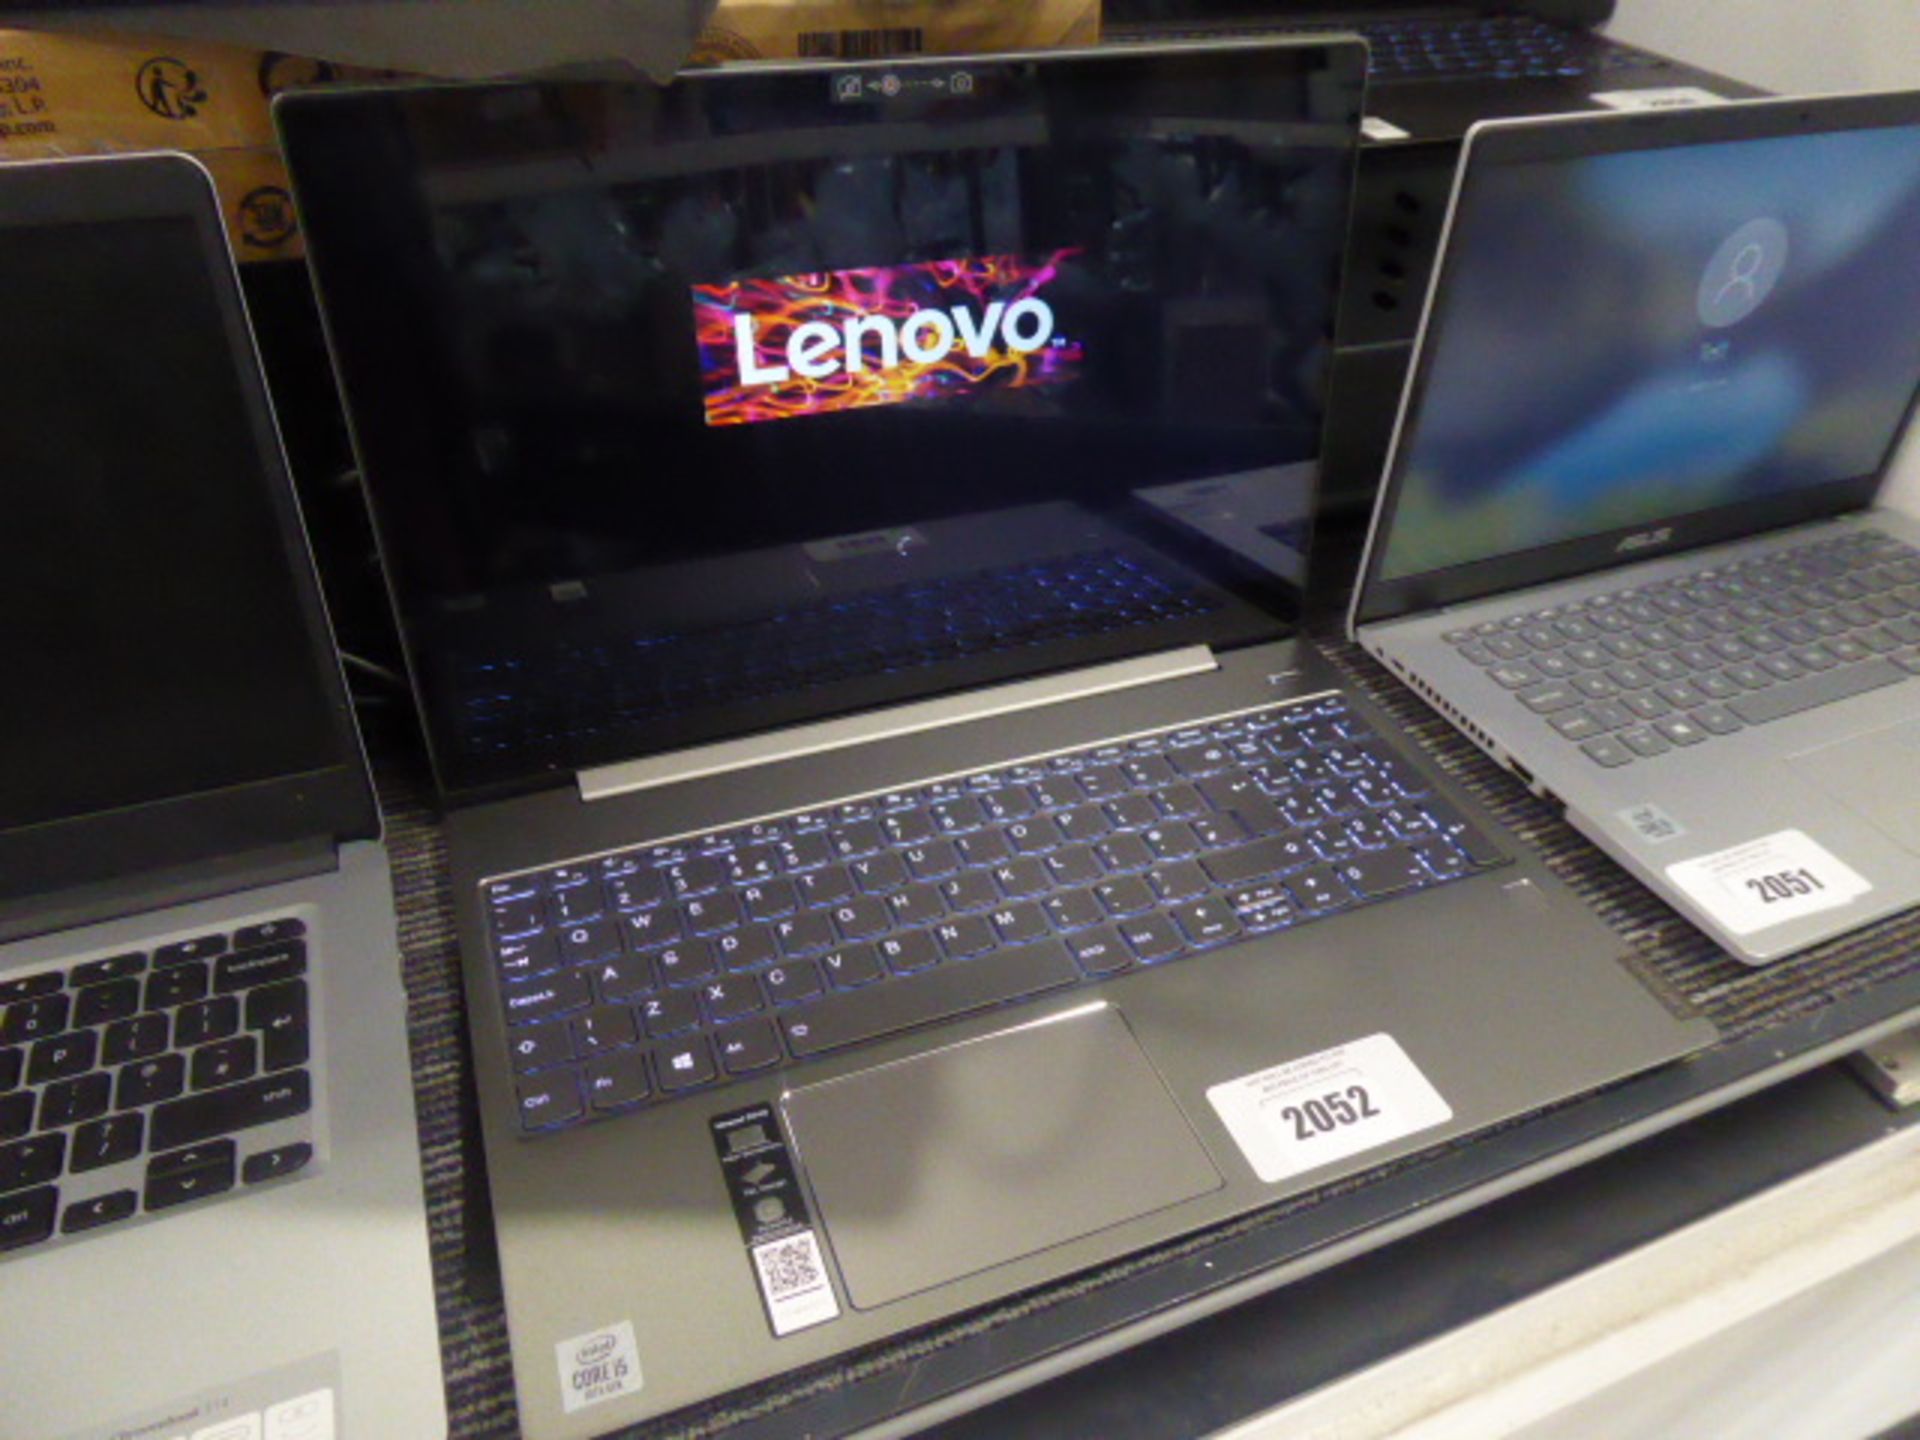 Lenovo Ideapad S540 laptop core i5 10th gen processor, 8gb ram, 256gb ssd running Windows 10, no